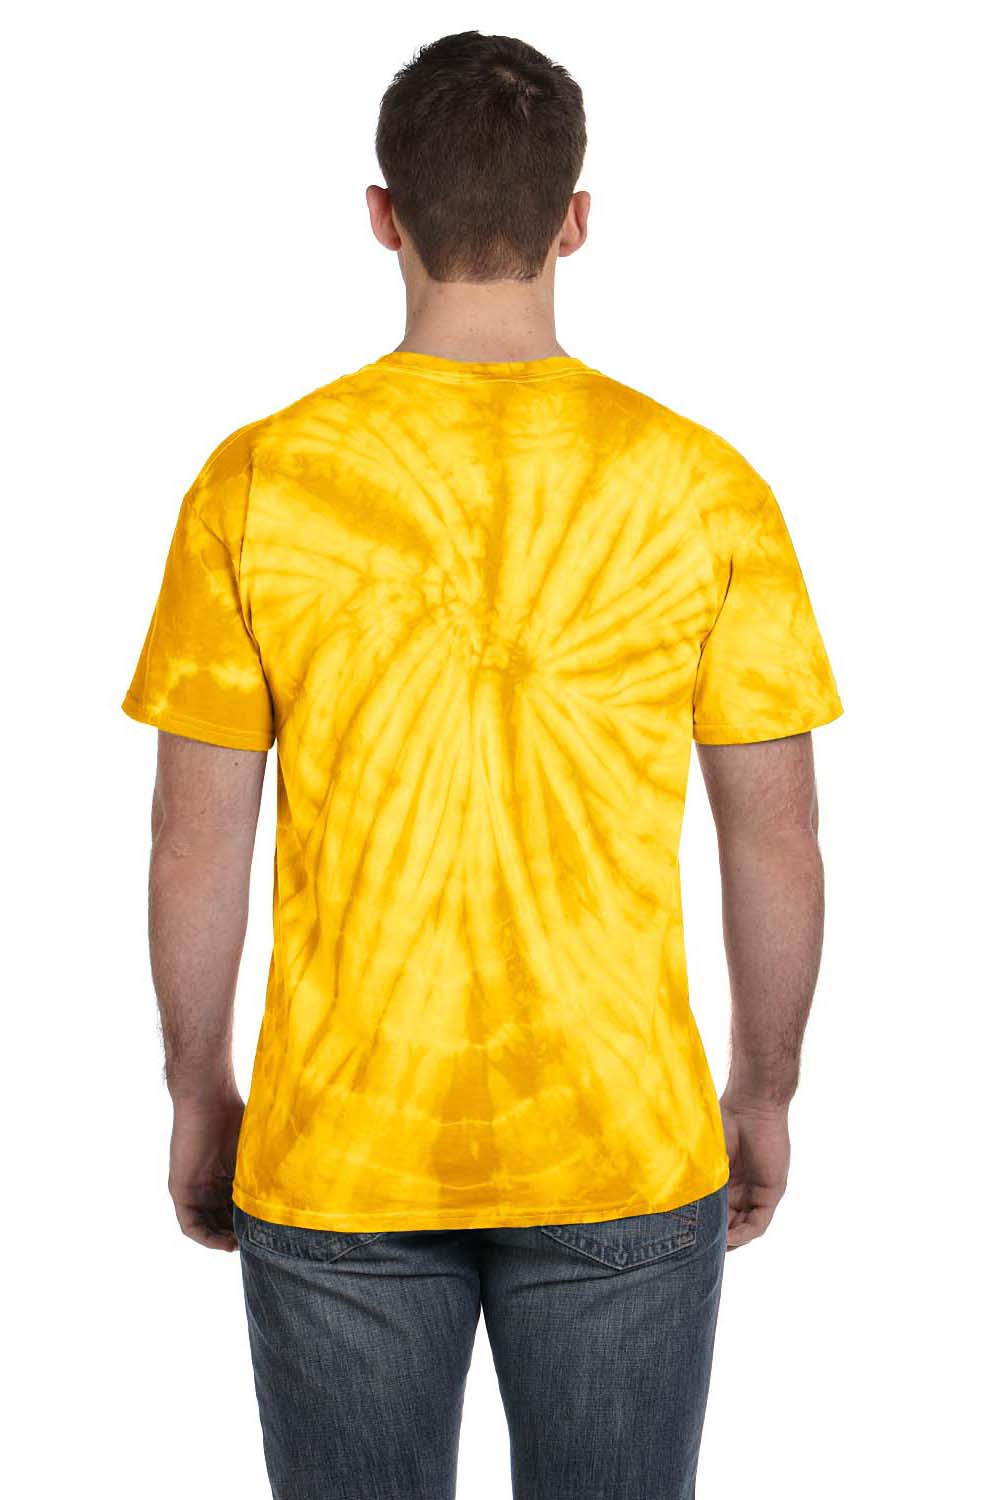 Tie-Dye CD101 Mens Short Sleeve Crewneck T-Shirt Gold Back